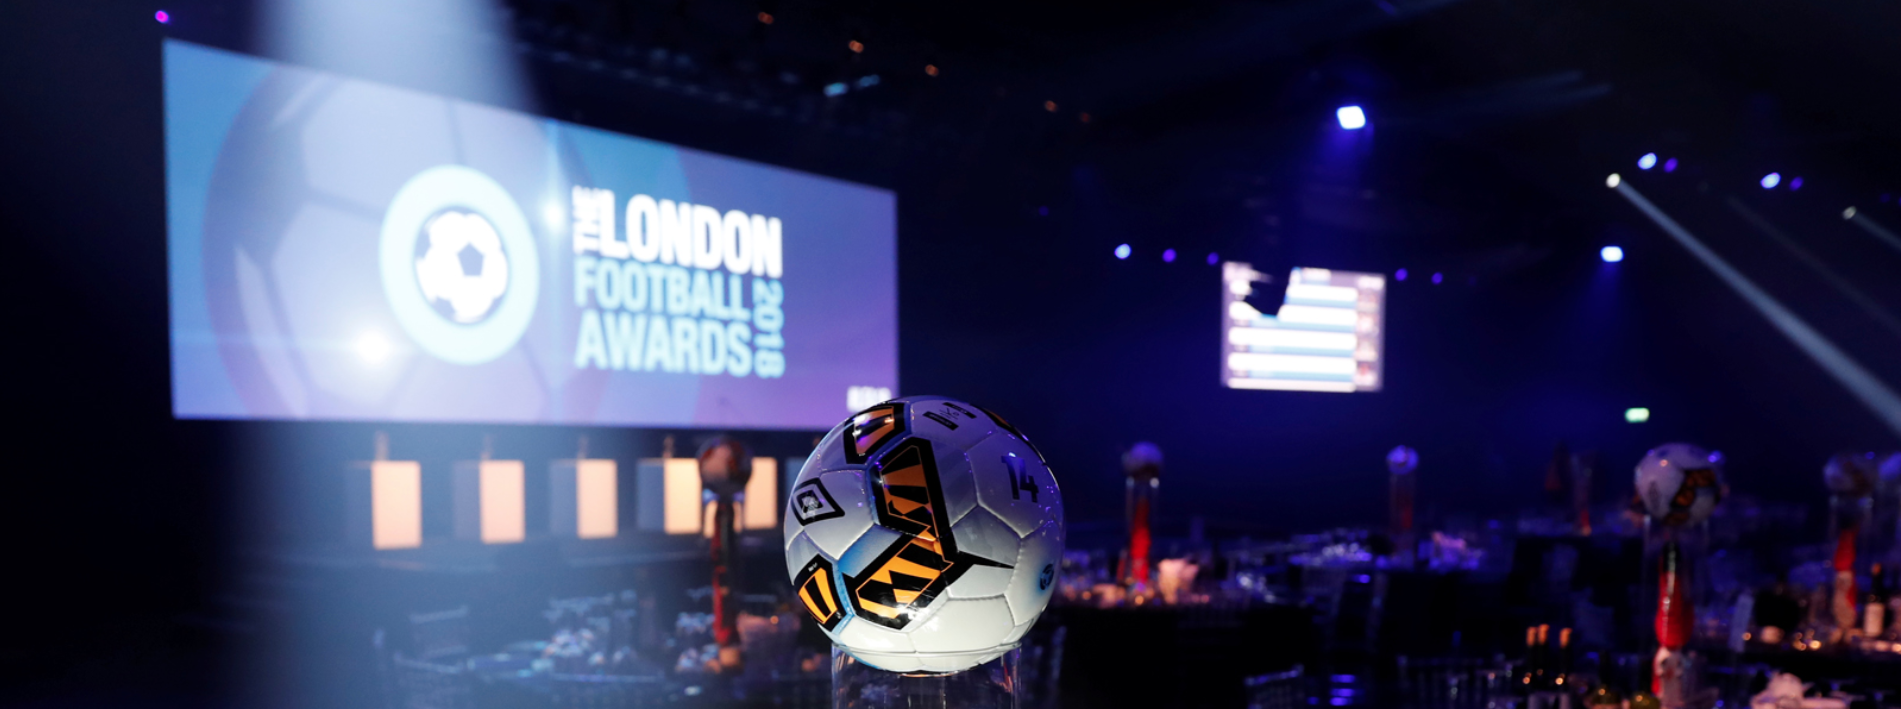 Les lauréats des London Football Awards 2019